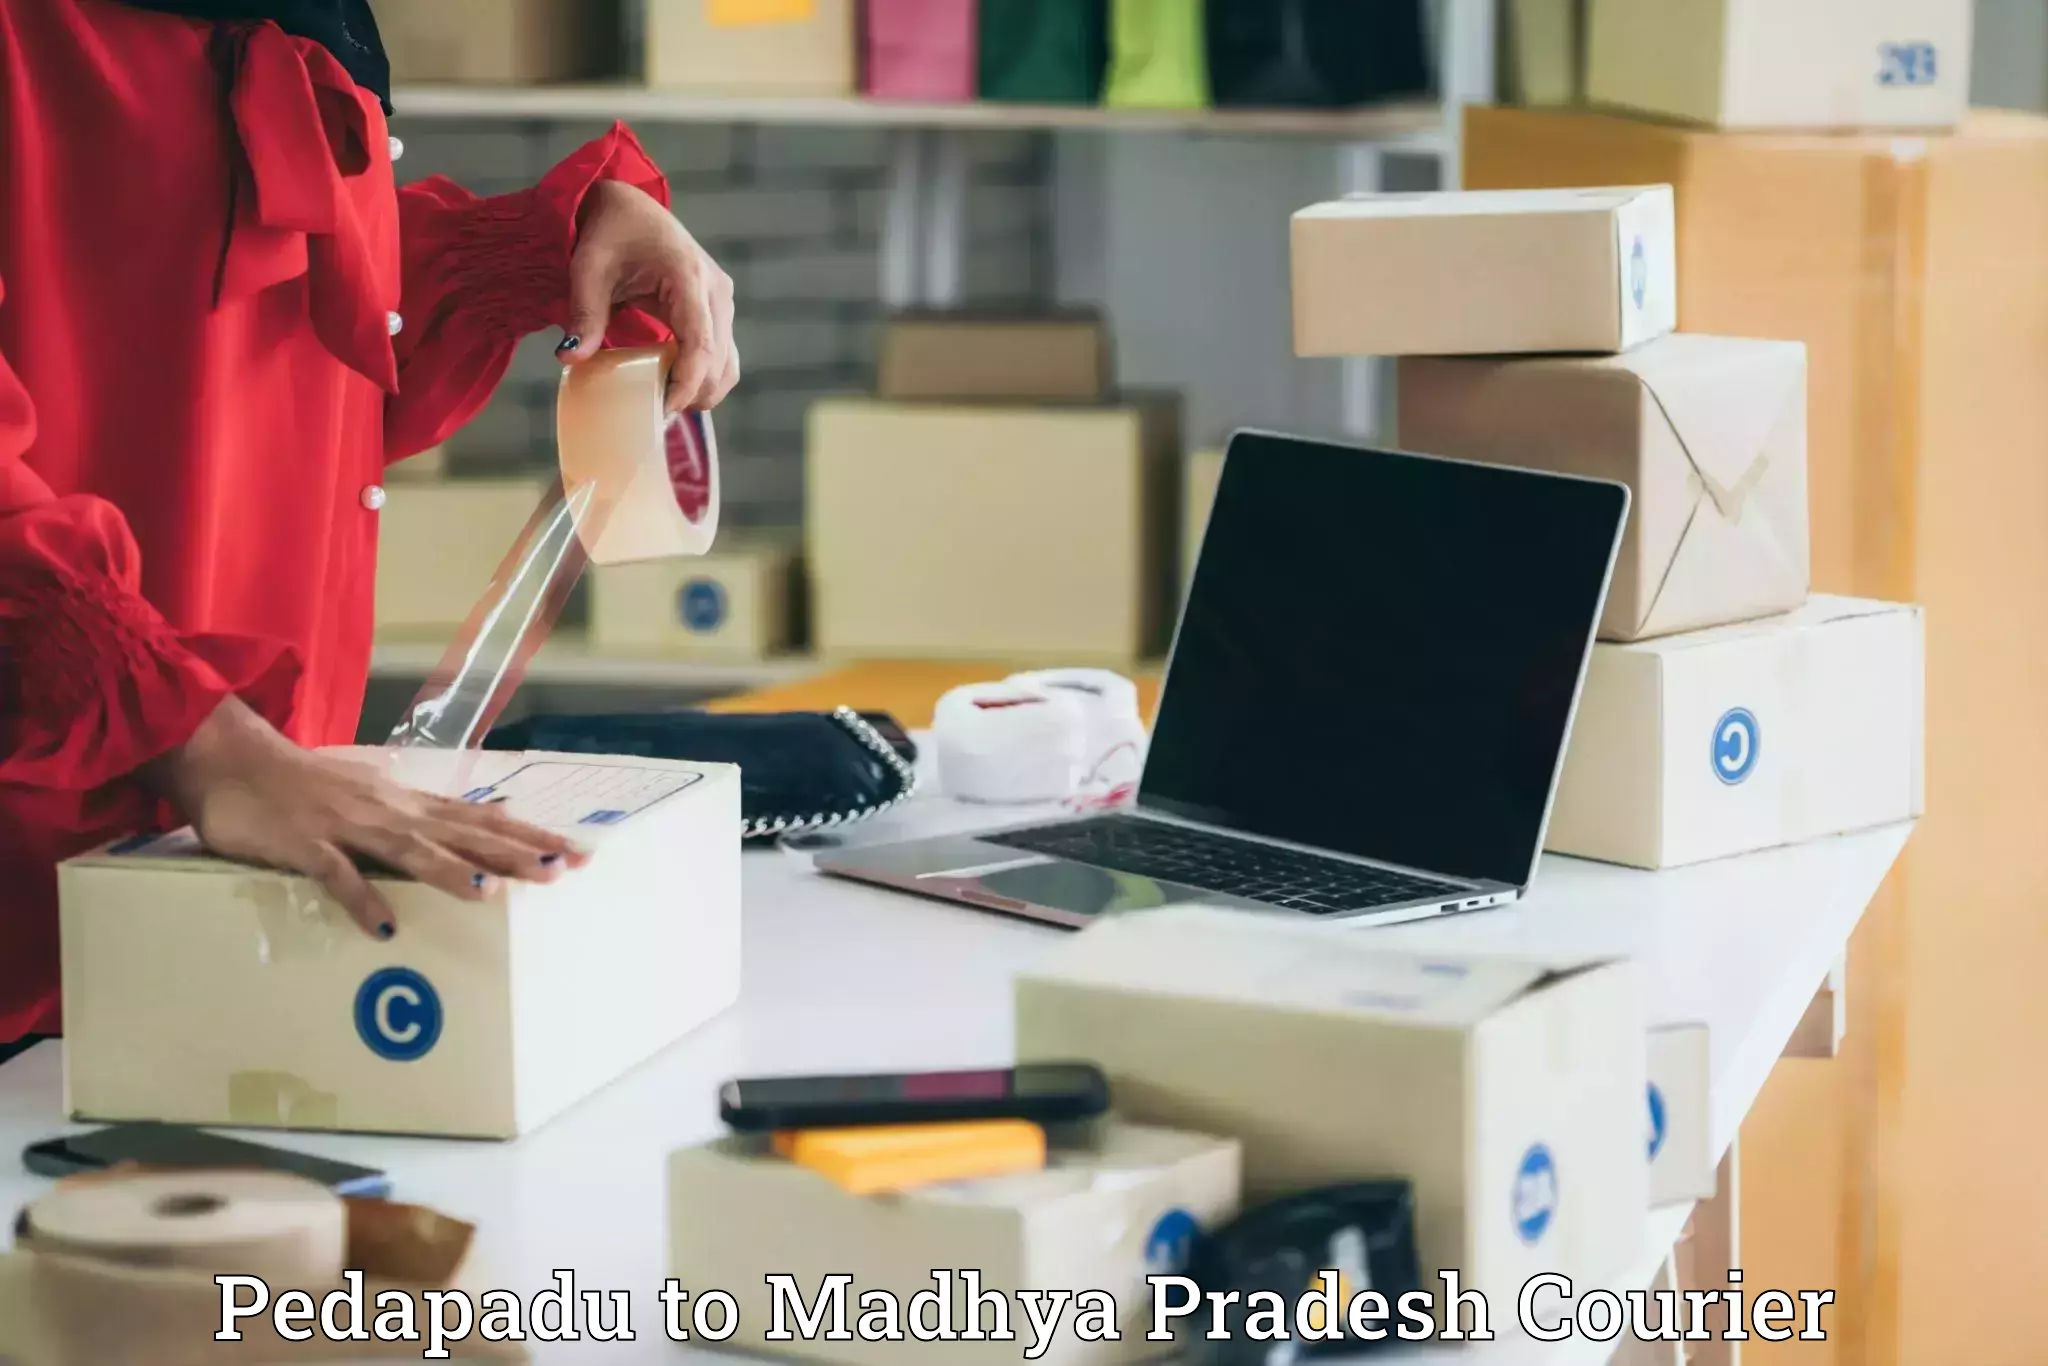 Smart logistics strategies Pedapadu to Nainpur